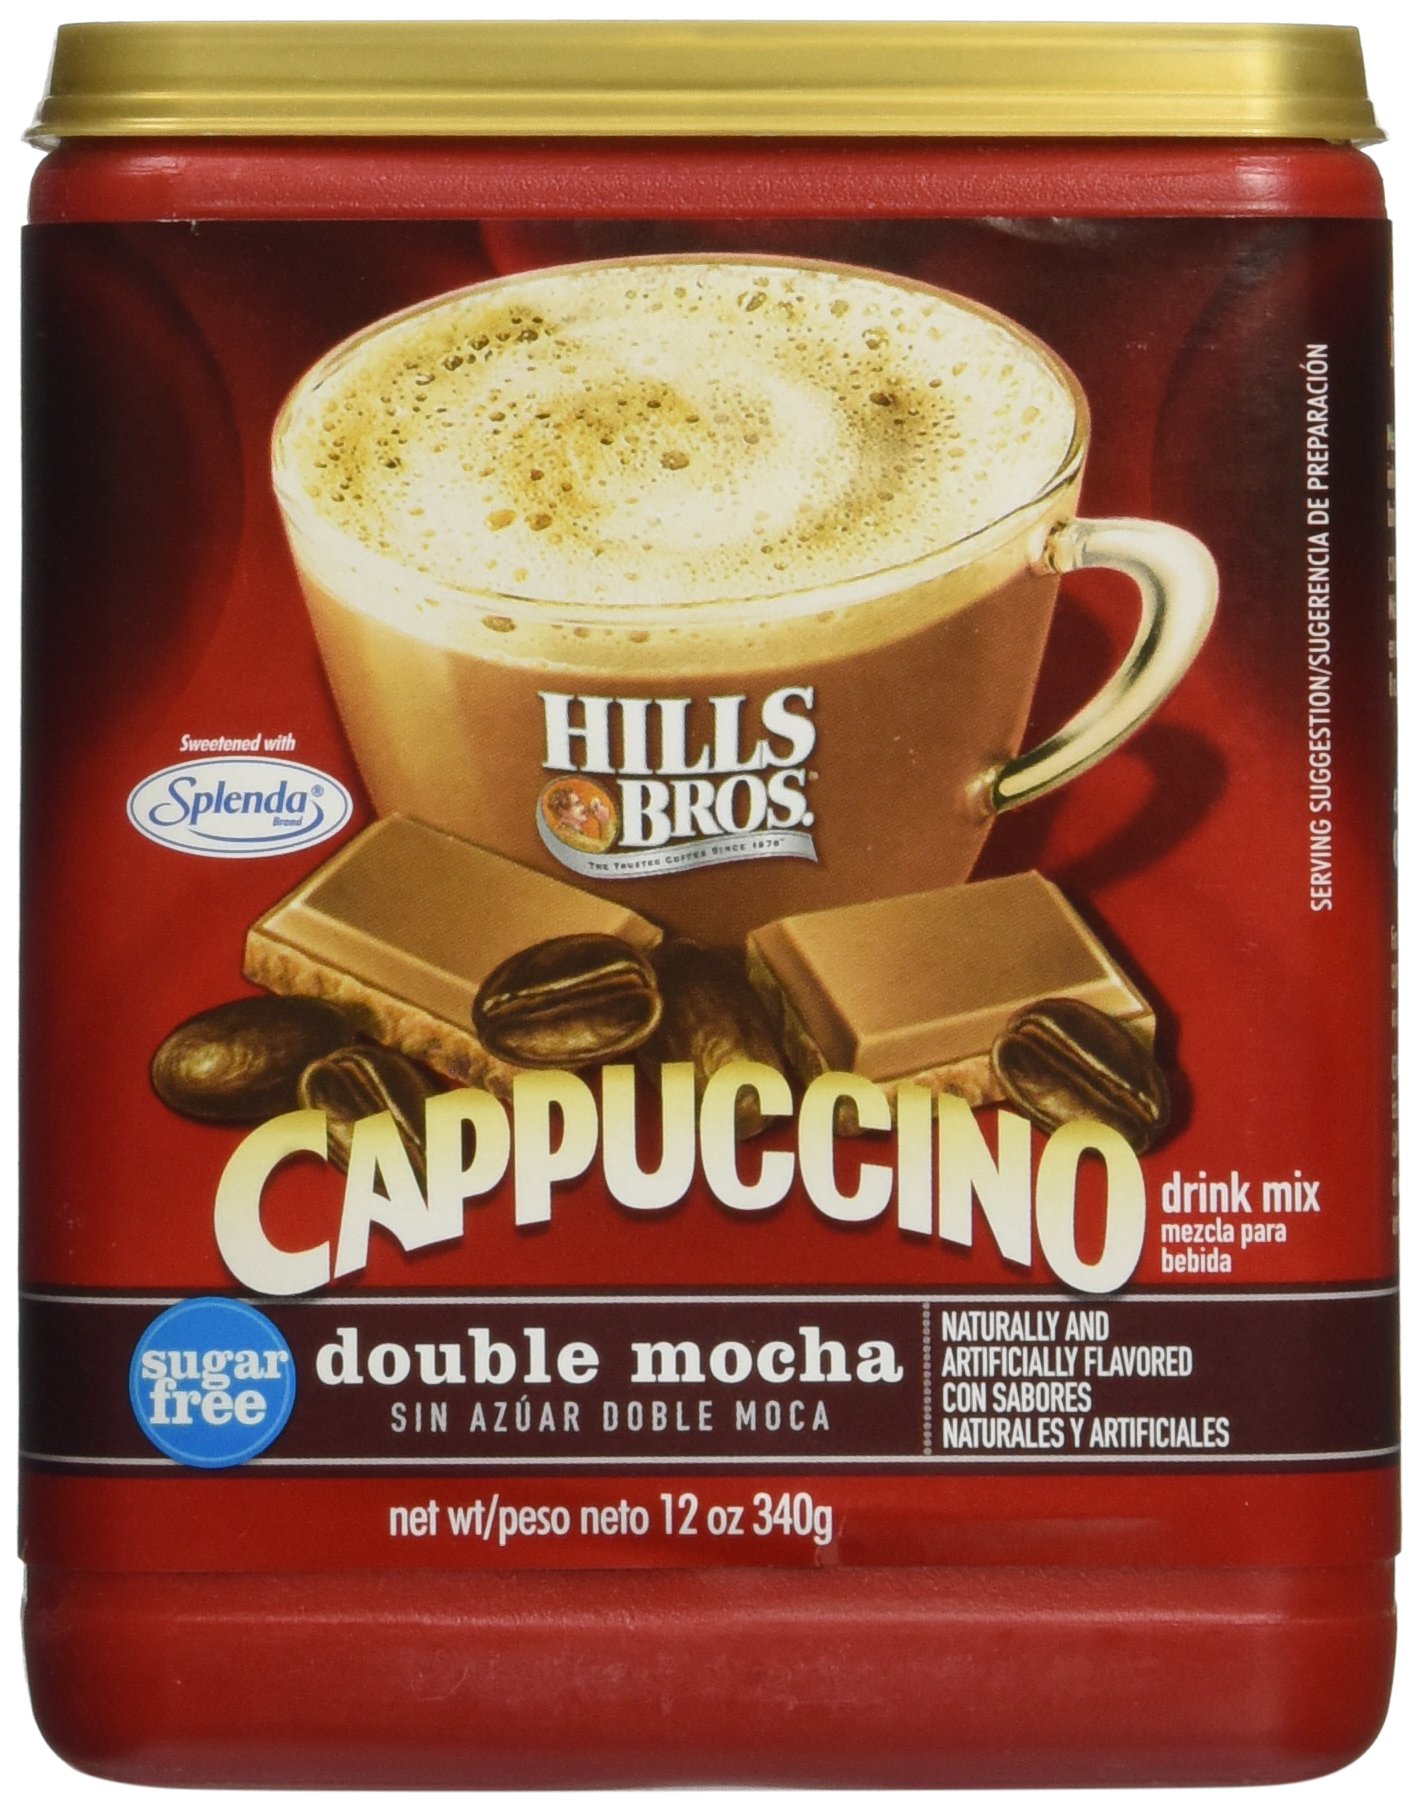 Hills Bros. Sugar-free Double Mocha Cappuccino